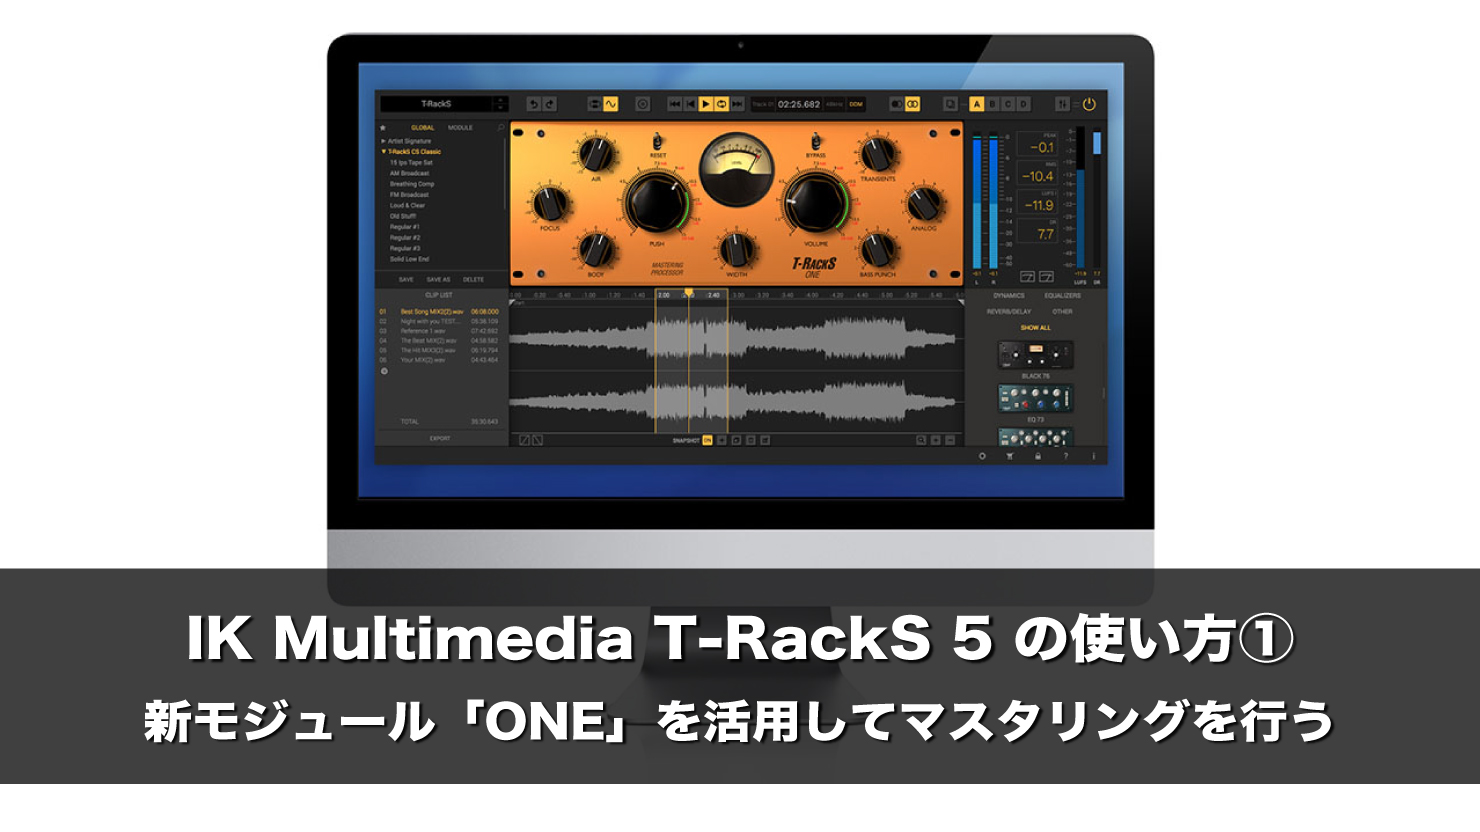 instal the new for mac IK Multimedia T-RackS 5 Complete 5.10.3